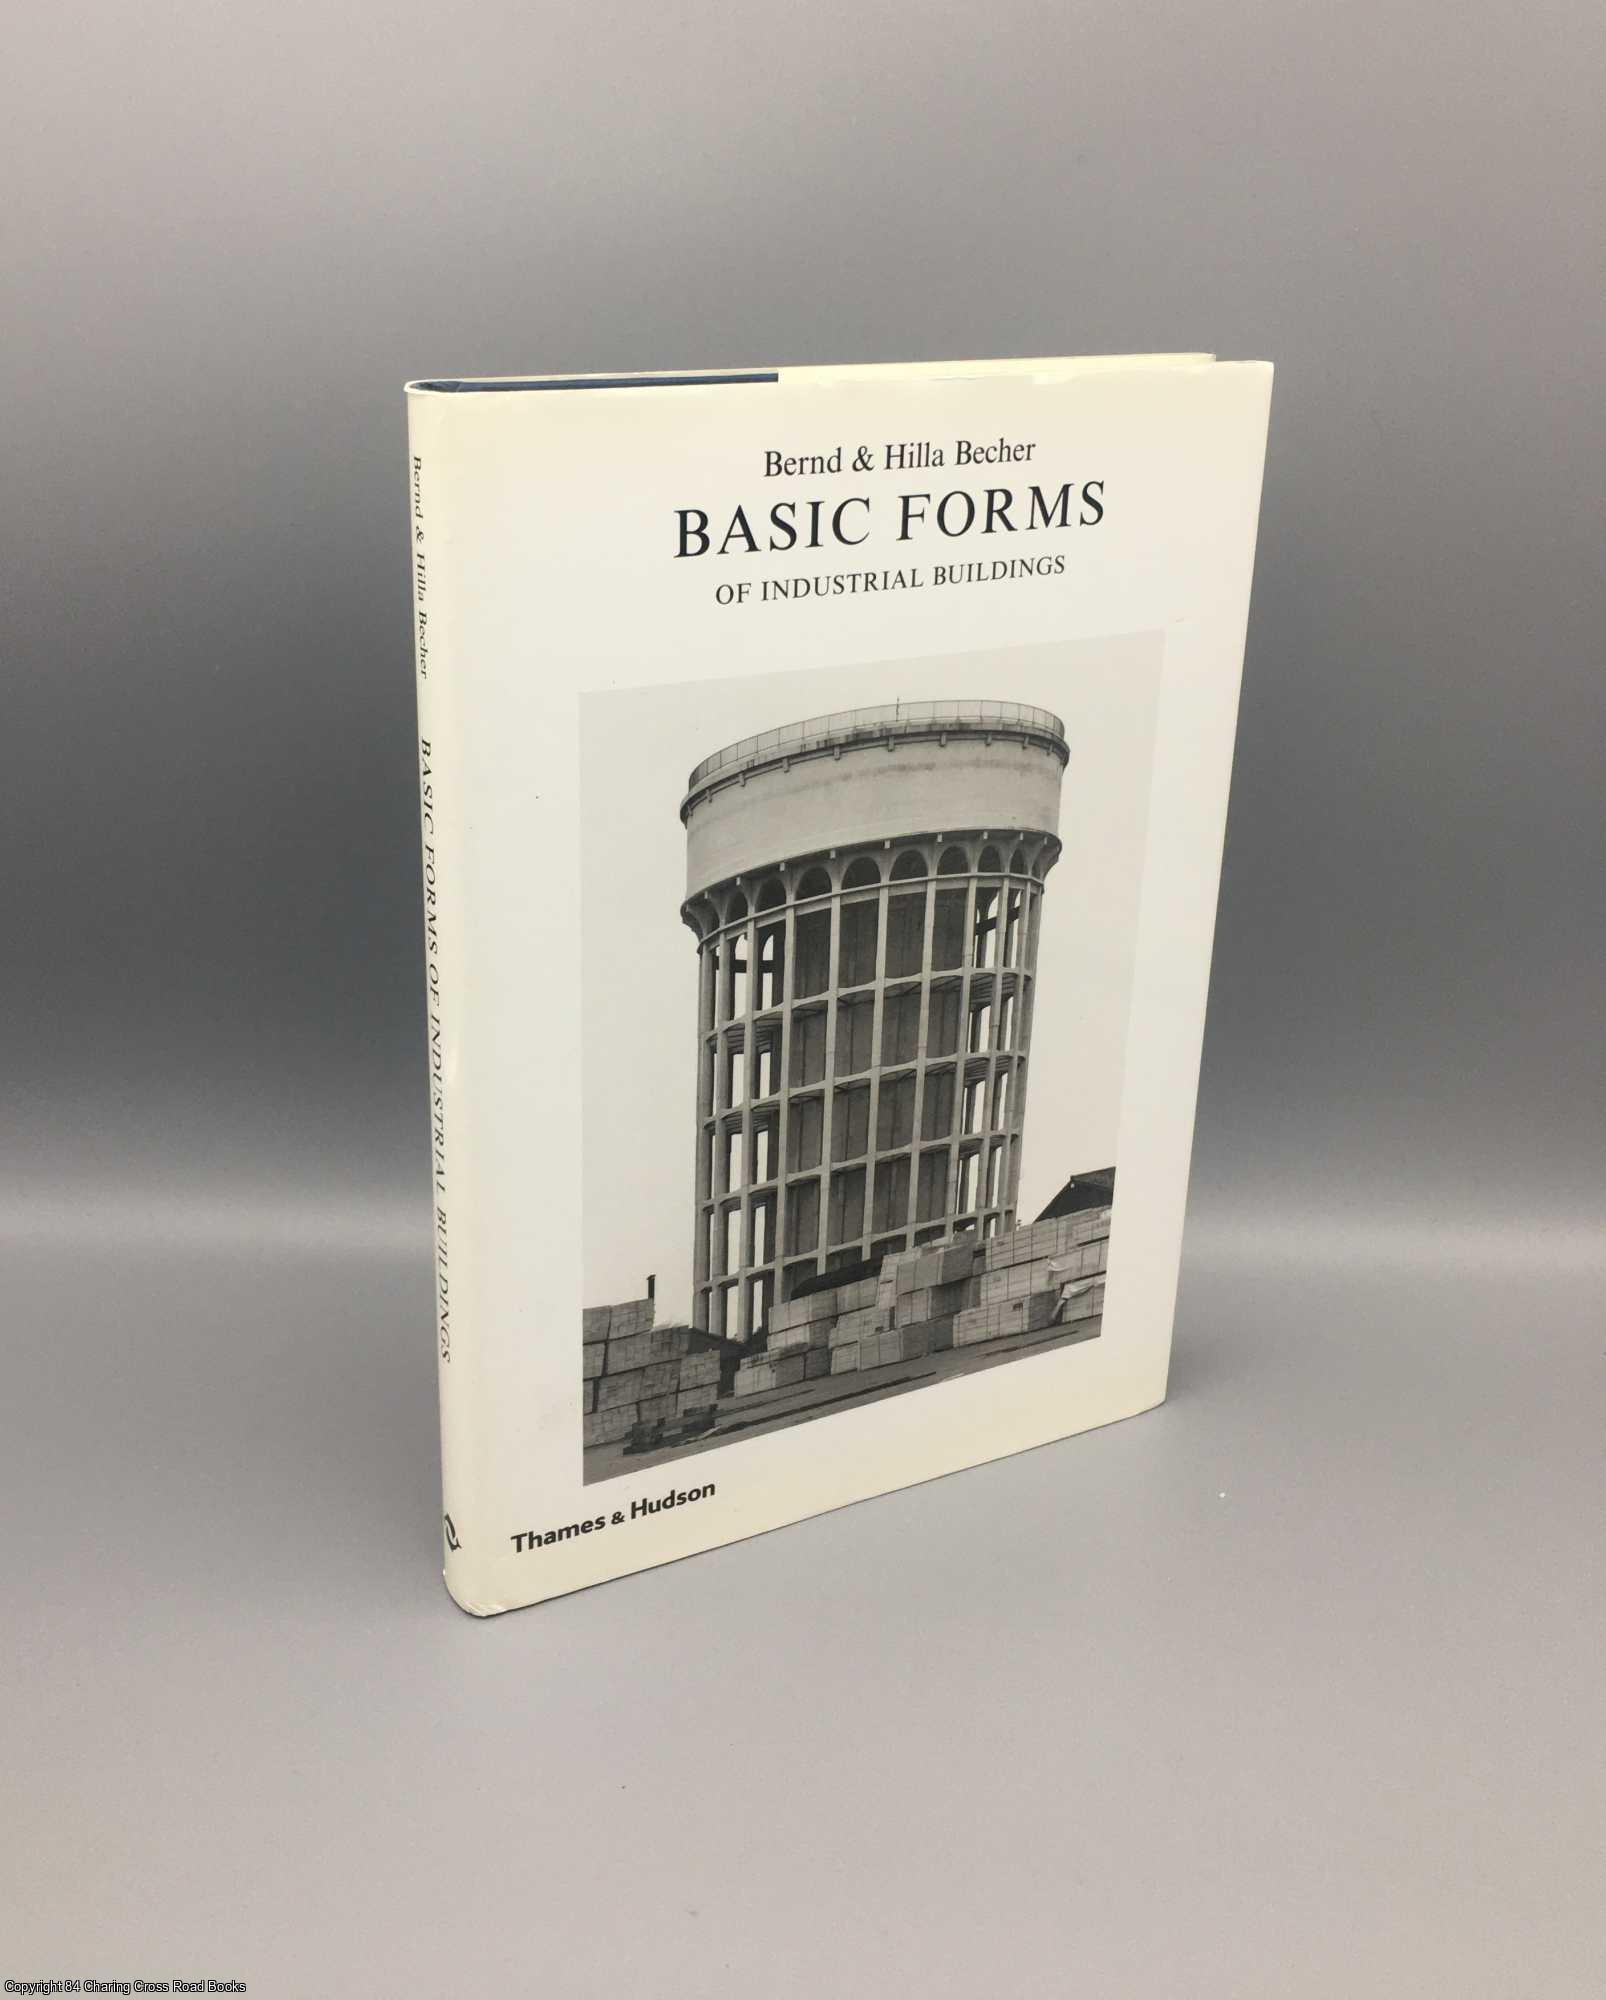 Becher, Bernd & Hilla - Basic Forms of Industrial Buildings